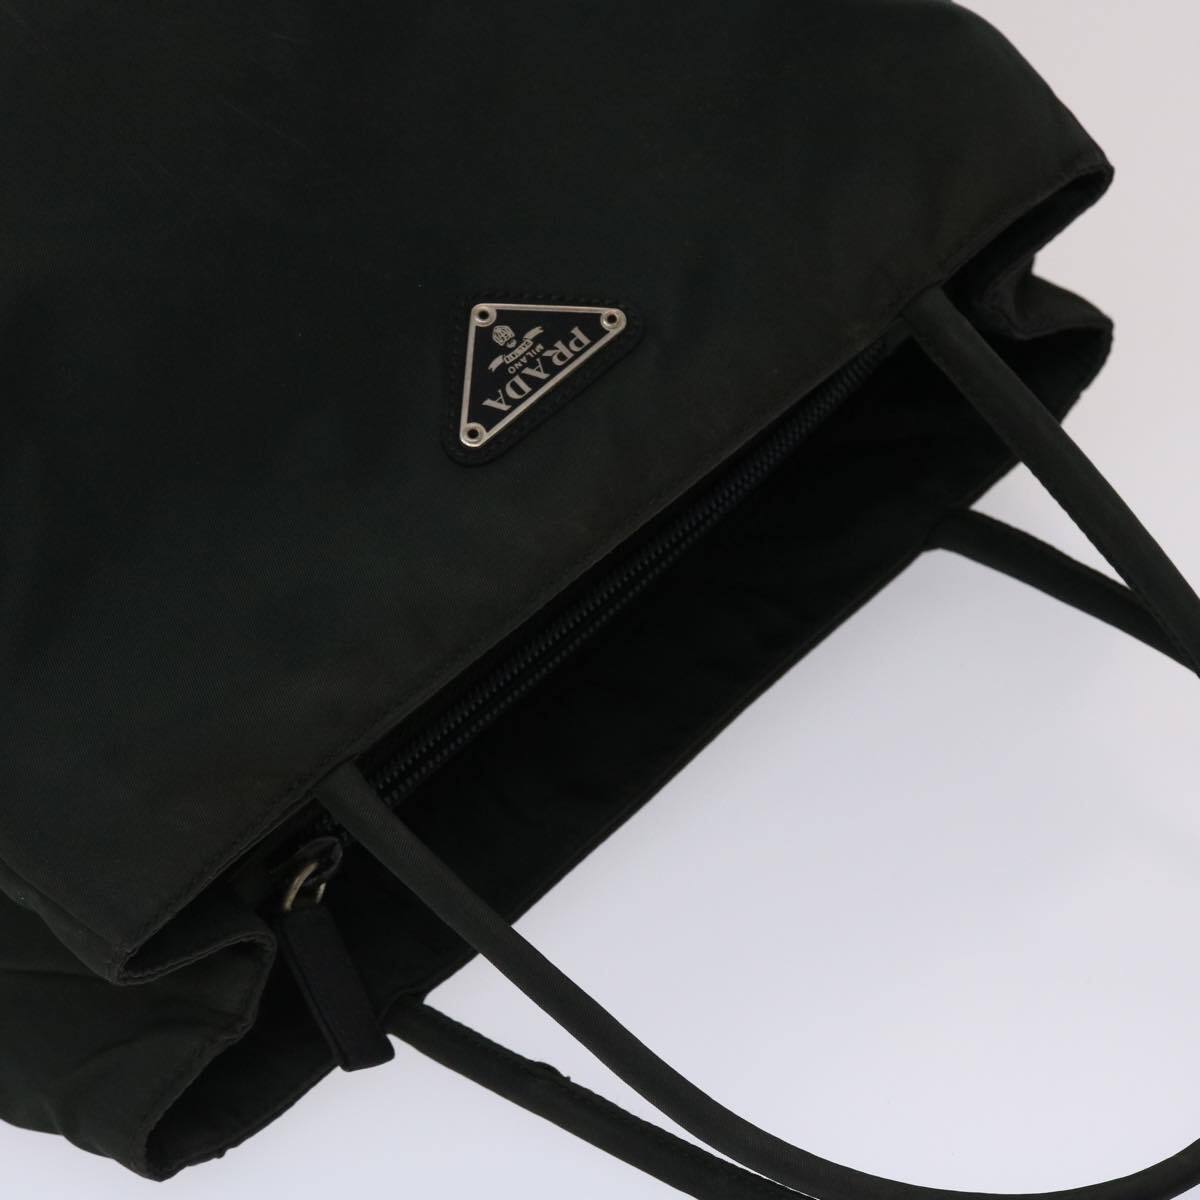 PRADA Milano Black Shoulder Bag – Timeless Vintage Company